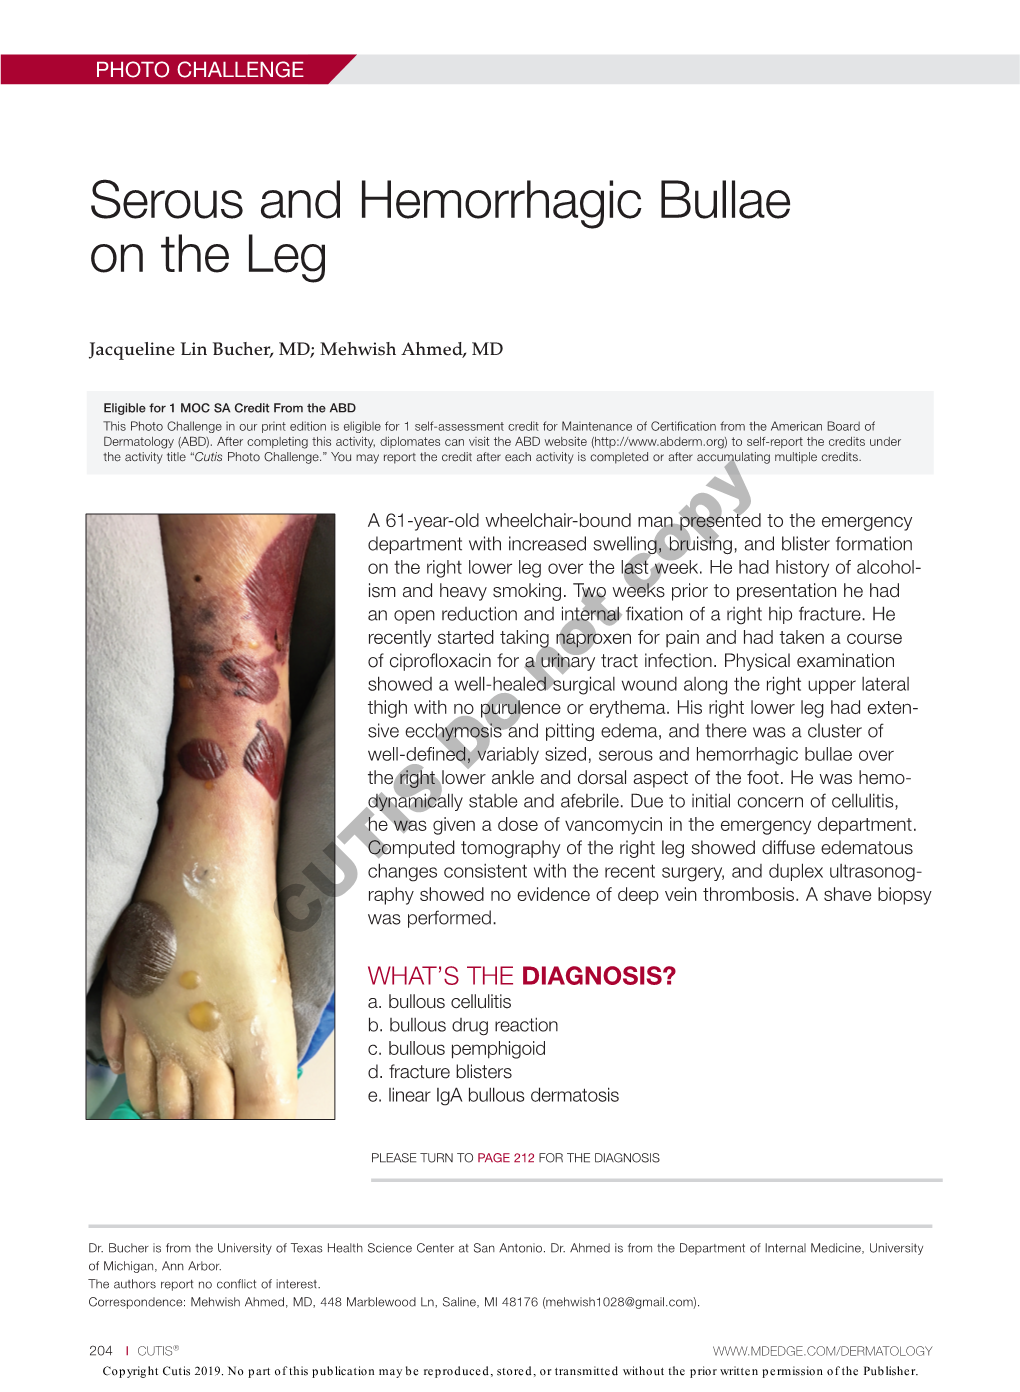 Serous and Hemorrhagic Bullae on the Leg